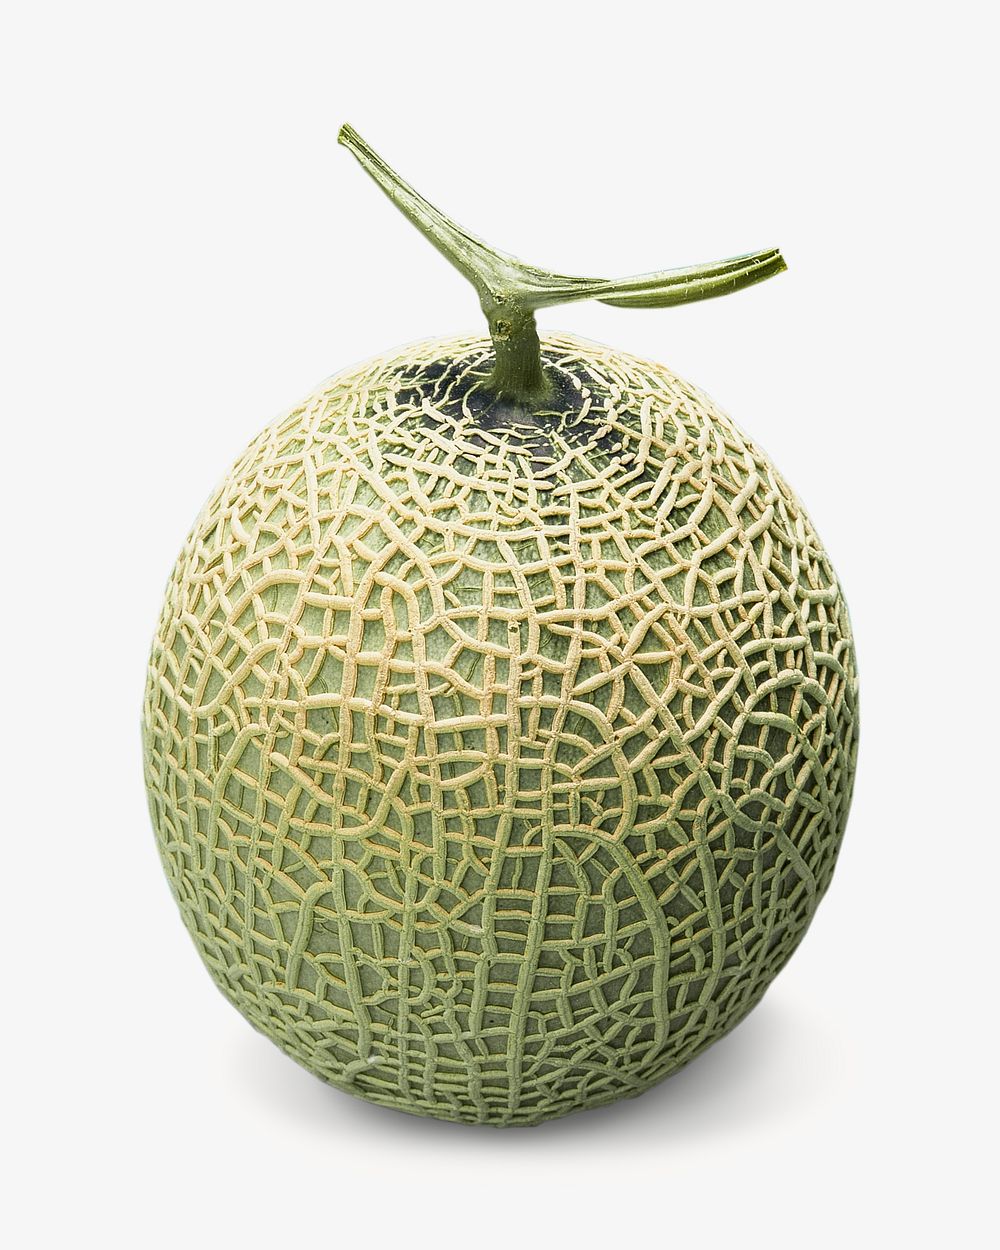 Melon image on white